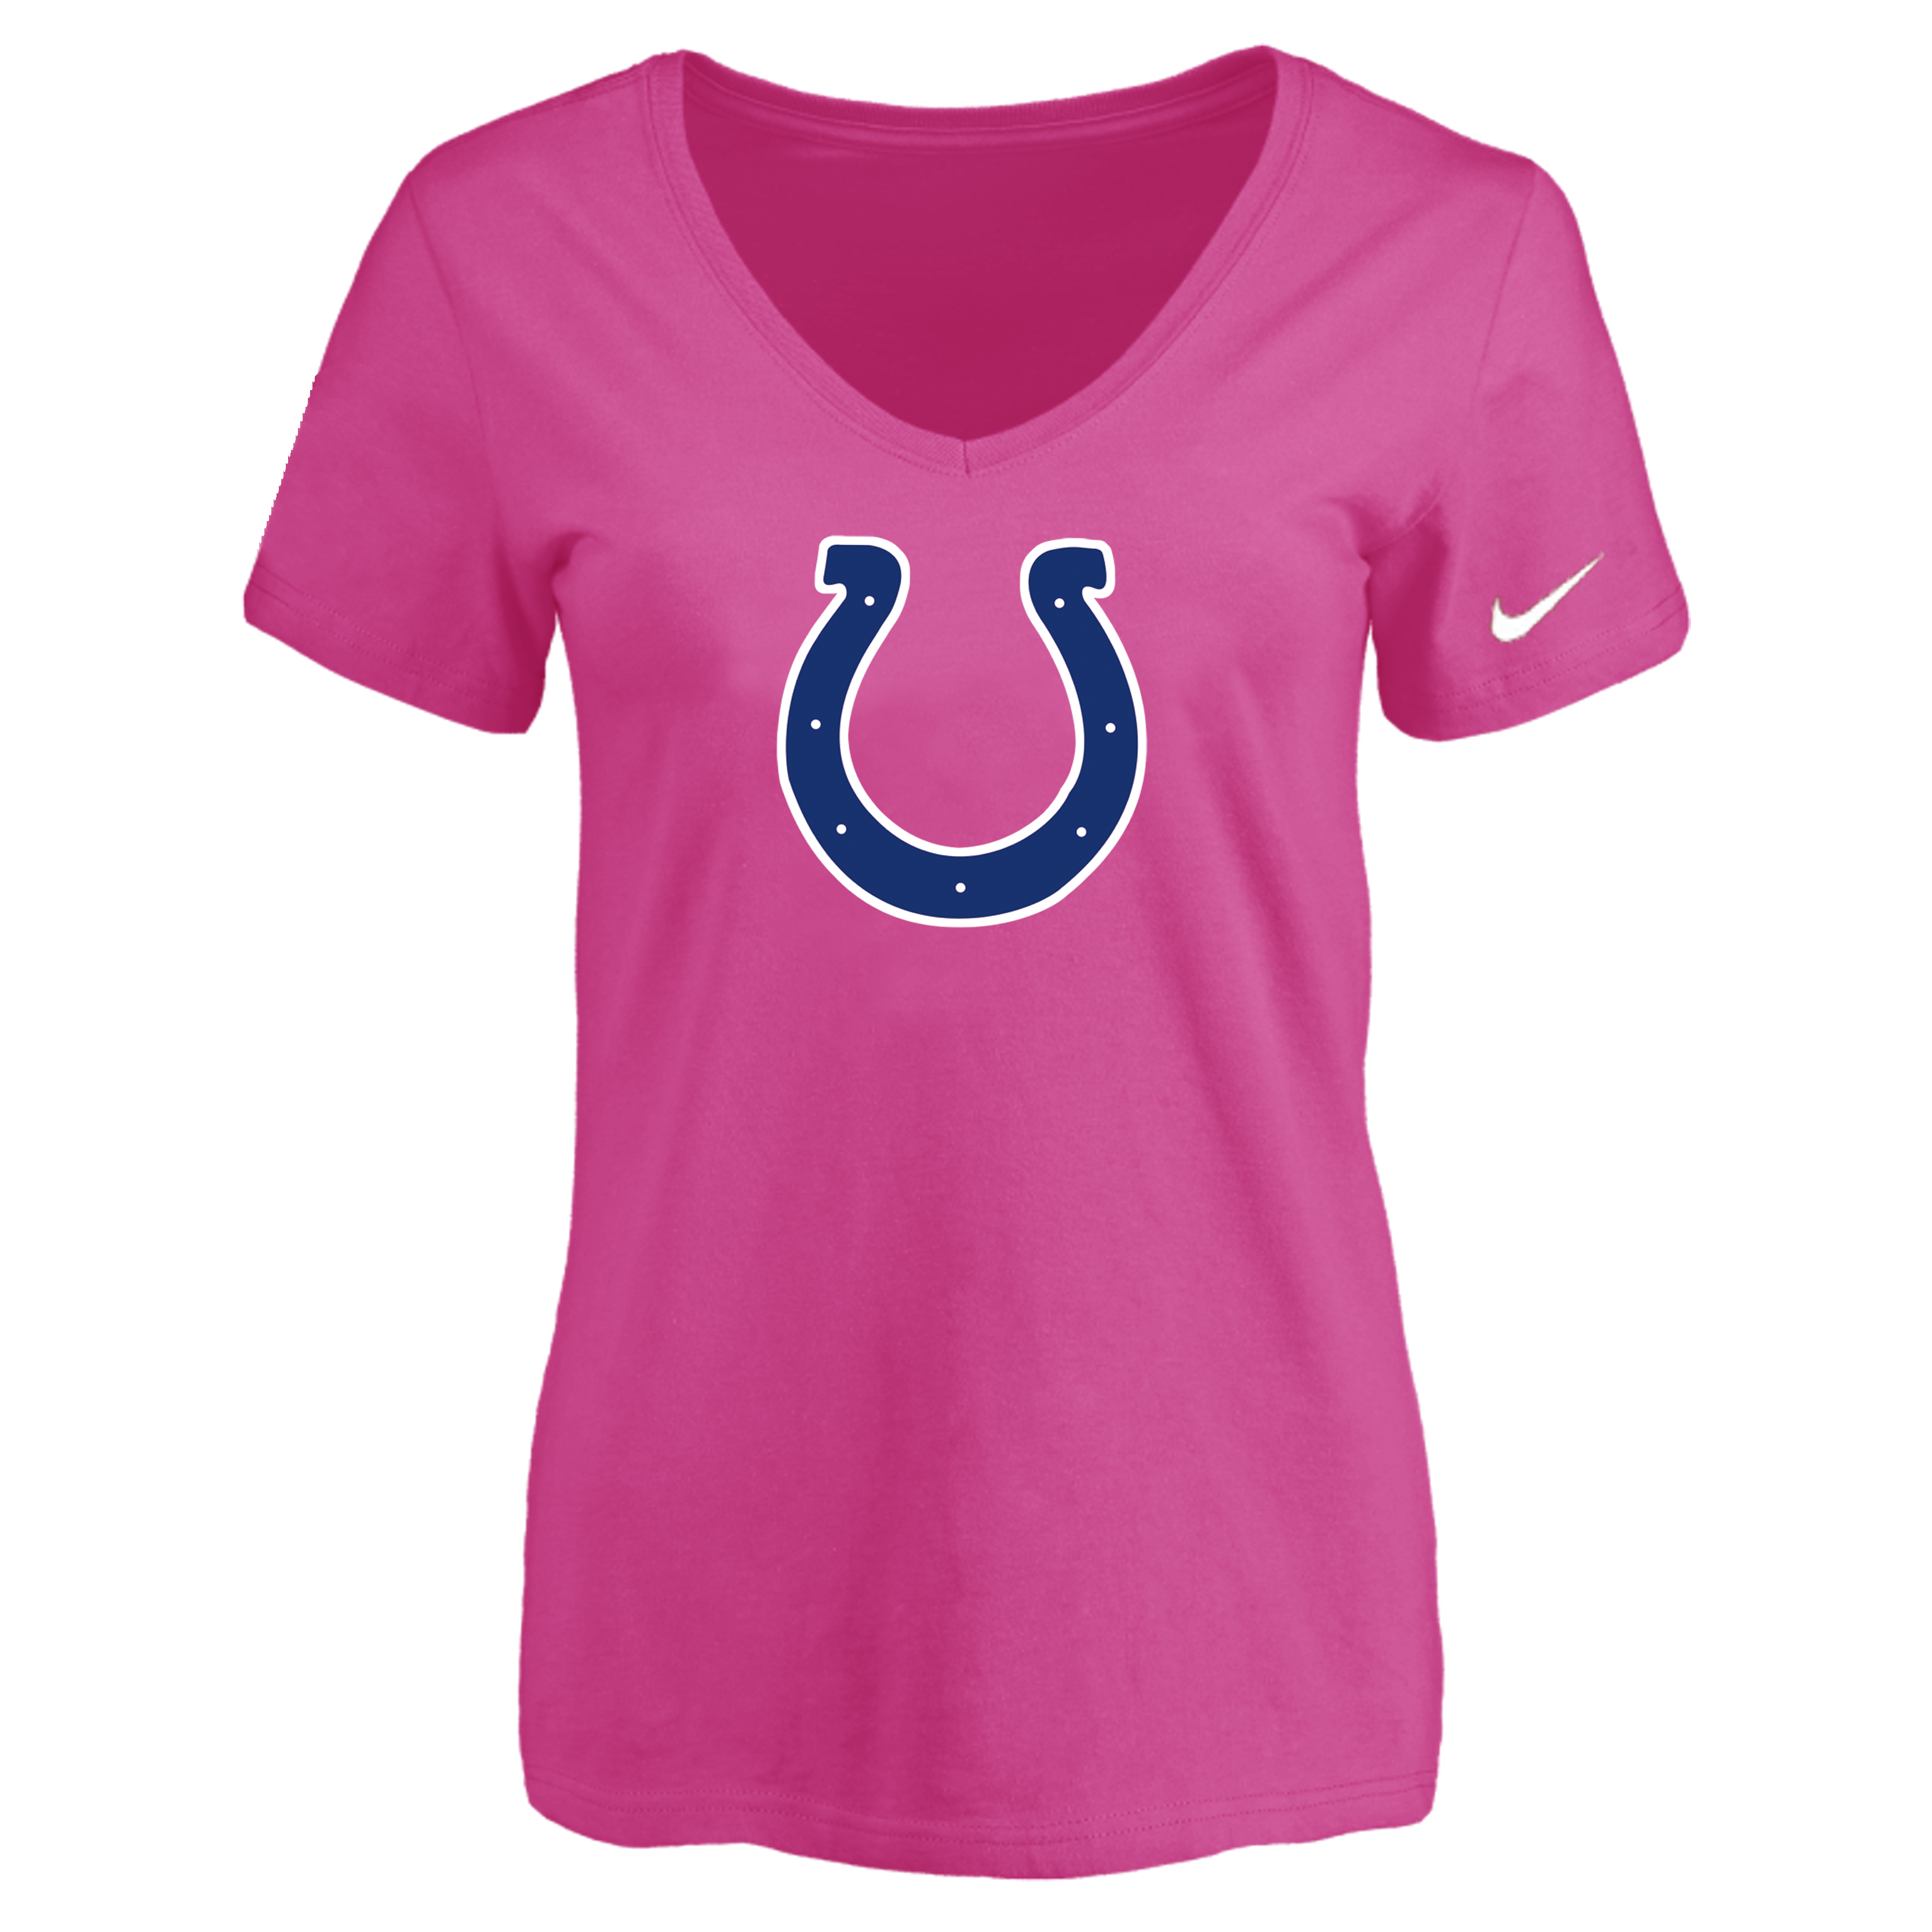 Indiannapolis Colts Peach Women's Logo V neck T-Shirt